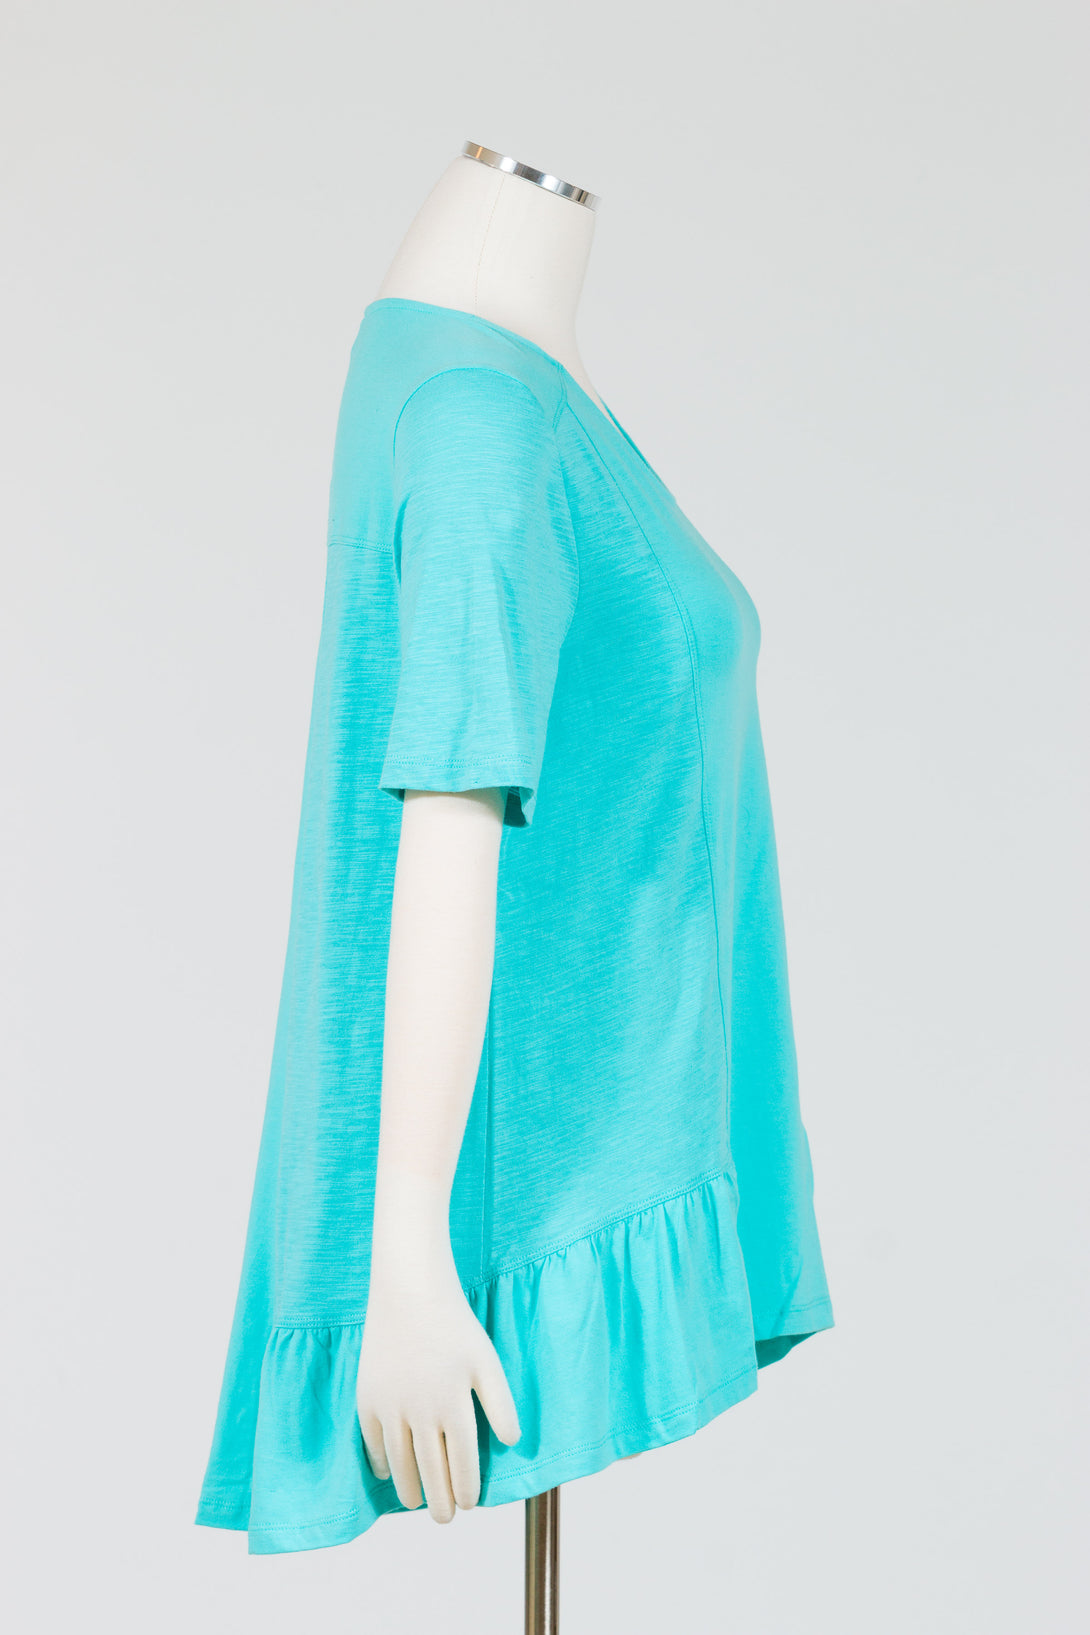 Neon Buddha Summertime Top (Cotton Knit) {Blush/Ocean}